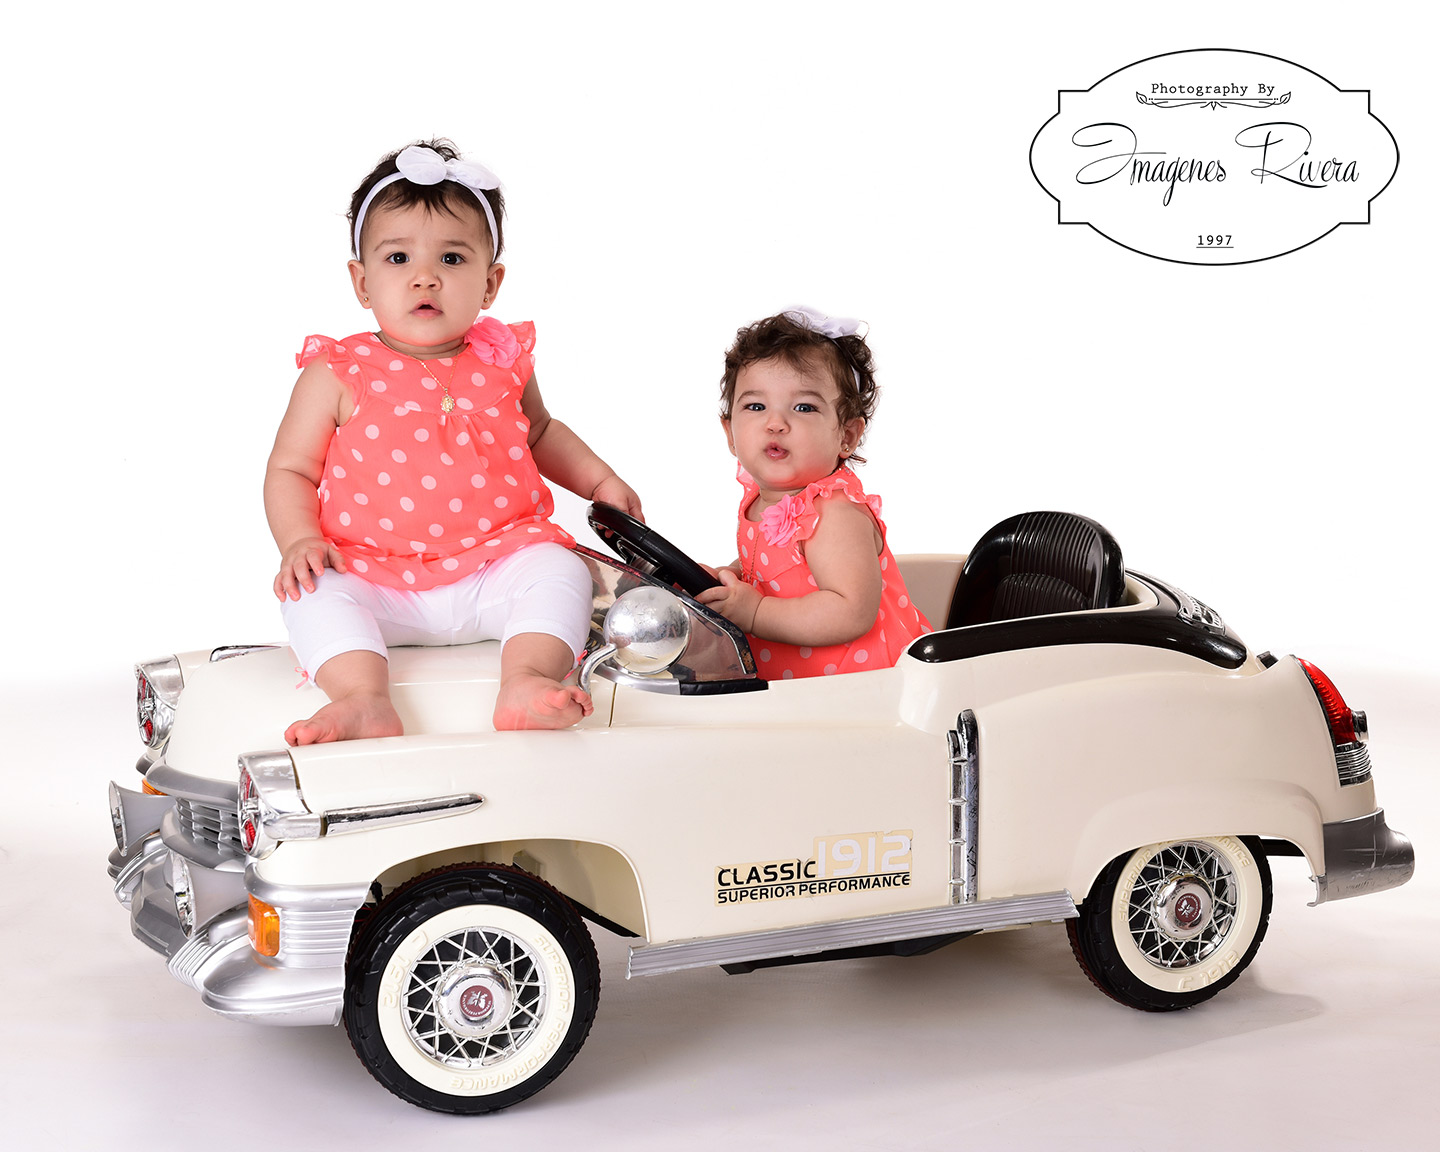 ♥ One year old twins baby portrait studio|Miami children photographer ♥